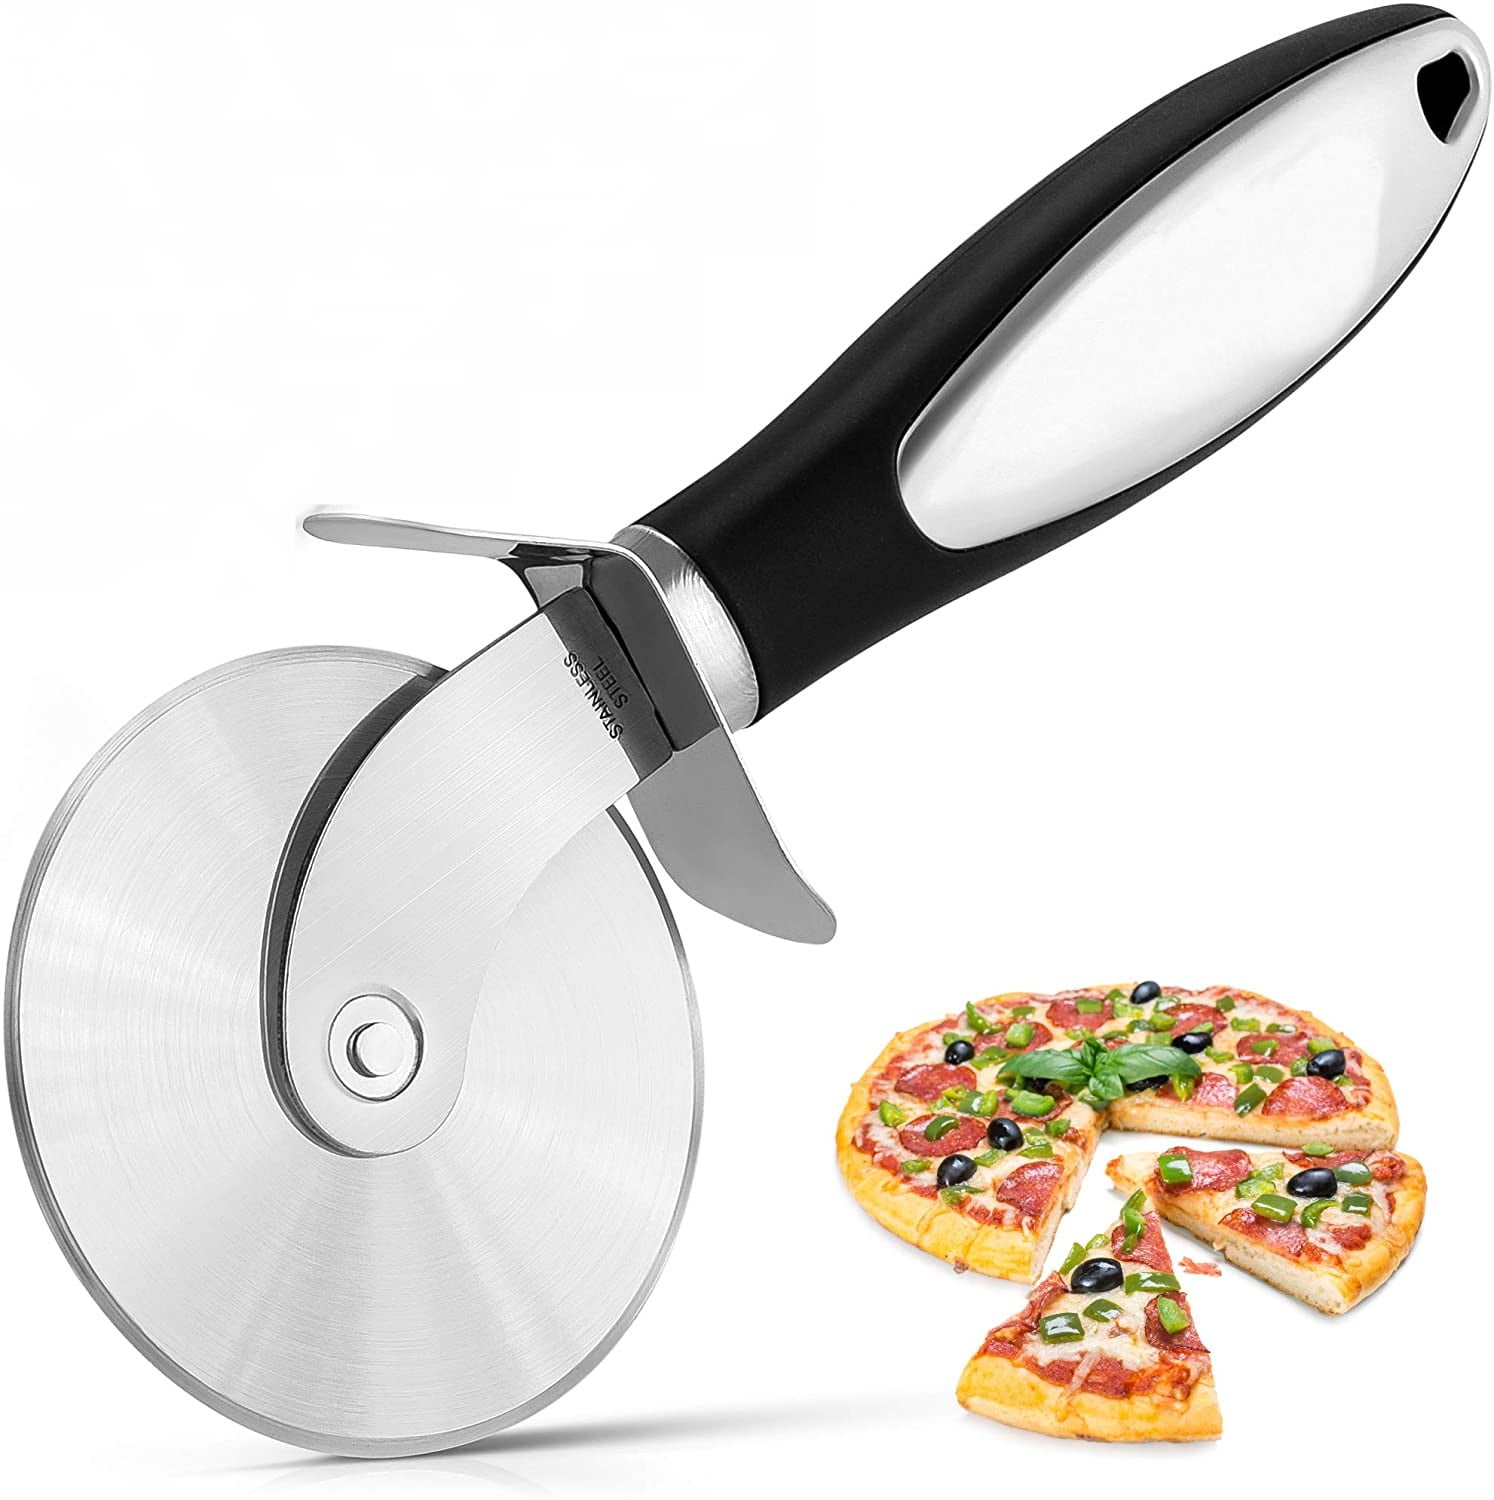 Details about   Stainless Steel 8'' Pizza Cutter Wheel Slicer Pancake Cutting Kitchen Utensil 